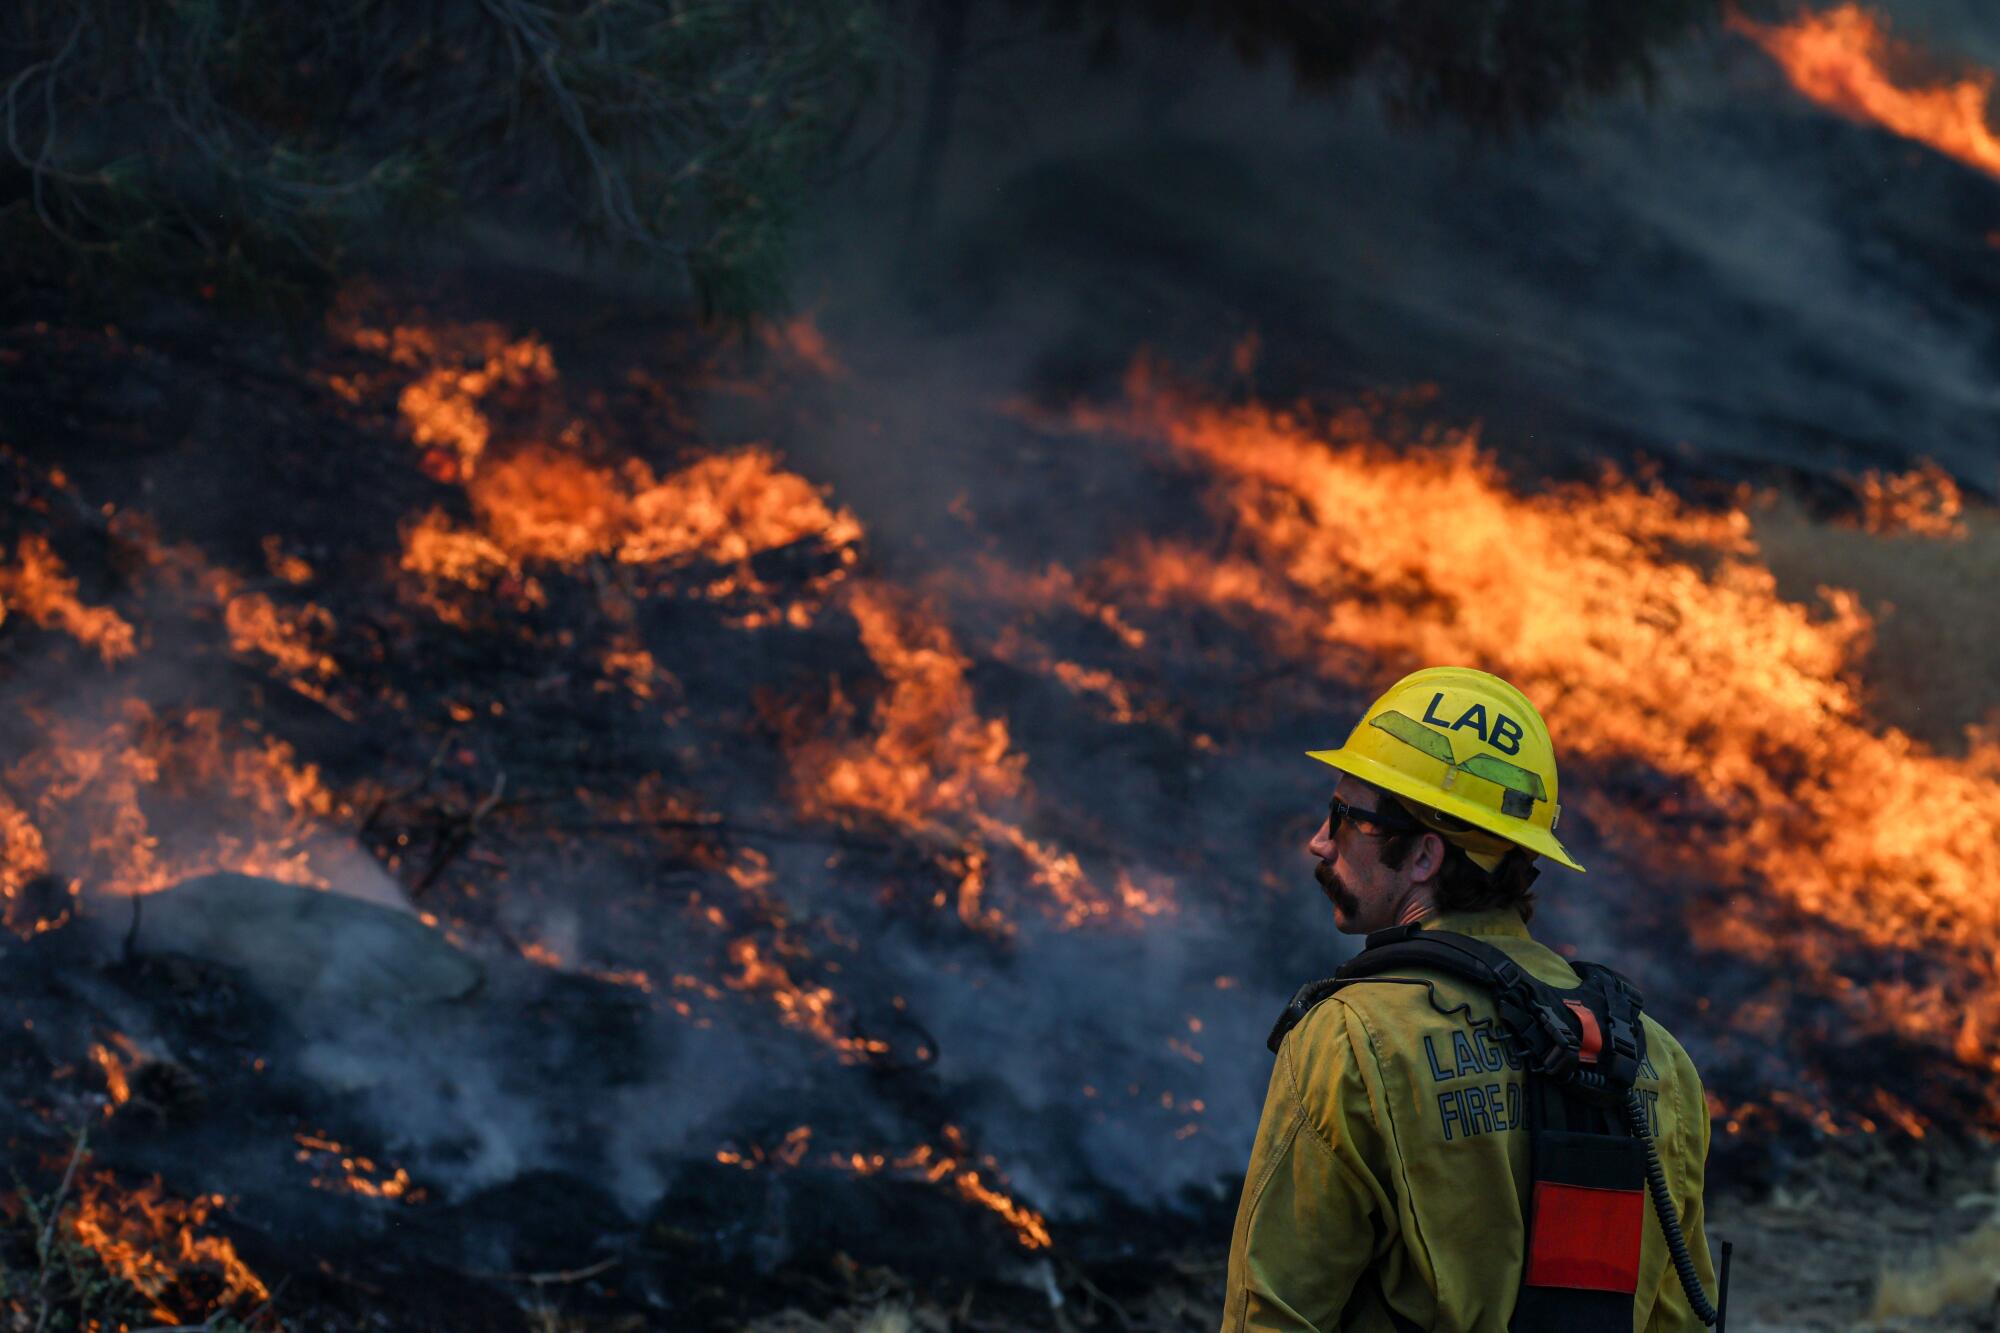 Laguna Beach firefighter Brian Adams keeps a close eye on fast-moving flames.